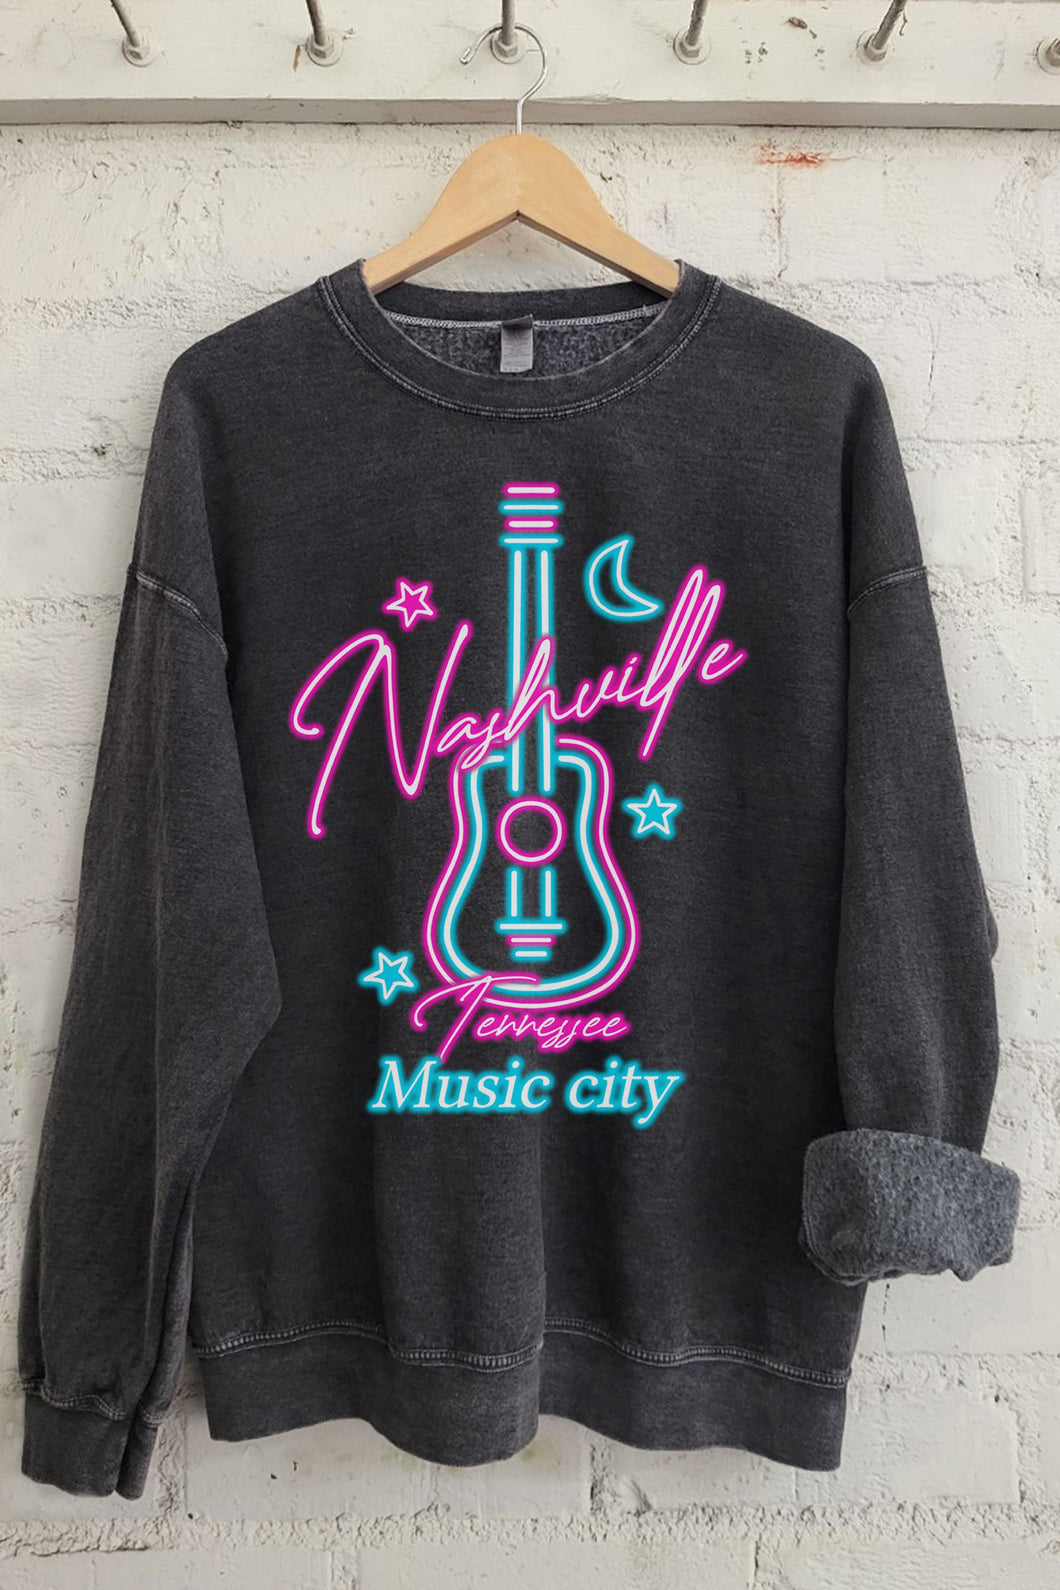 Black Neon Nashville Music City Rustee Sweatshirt 4/4/23 5901